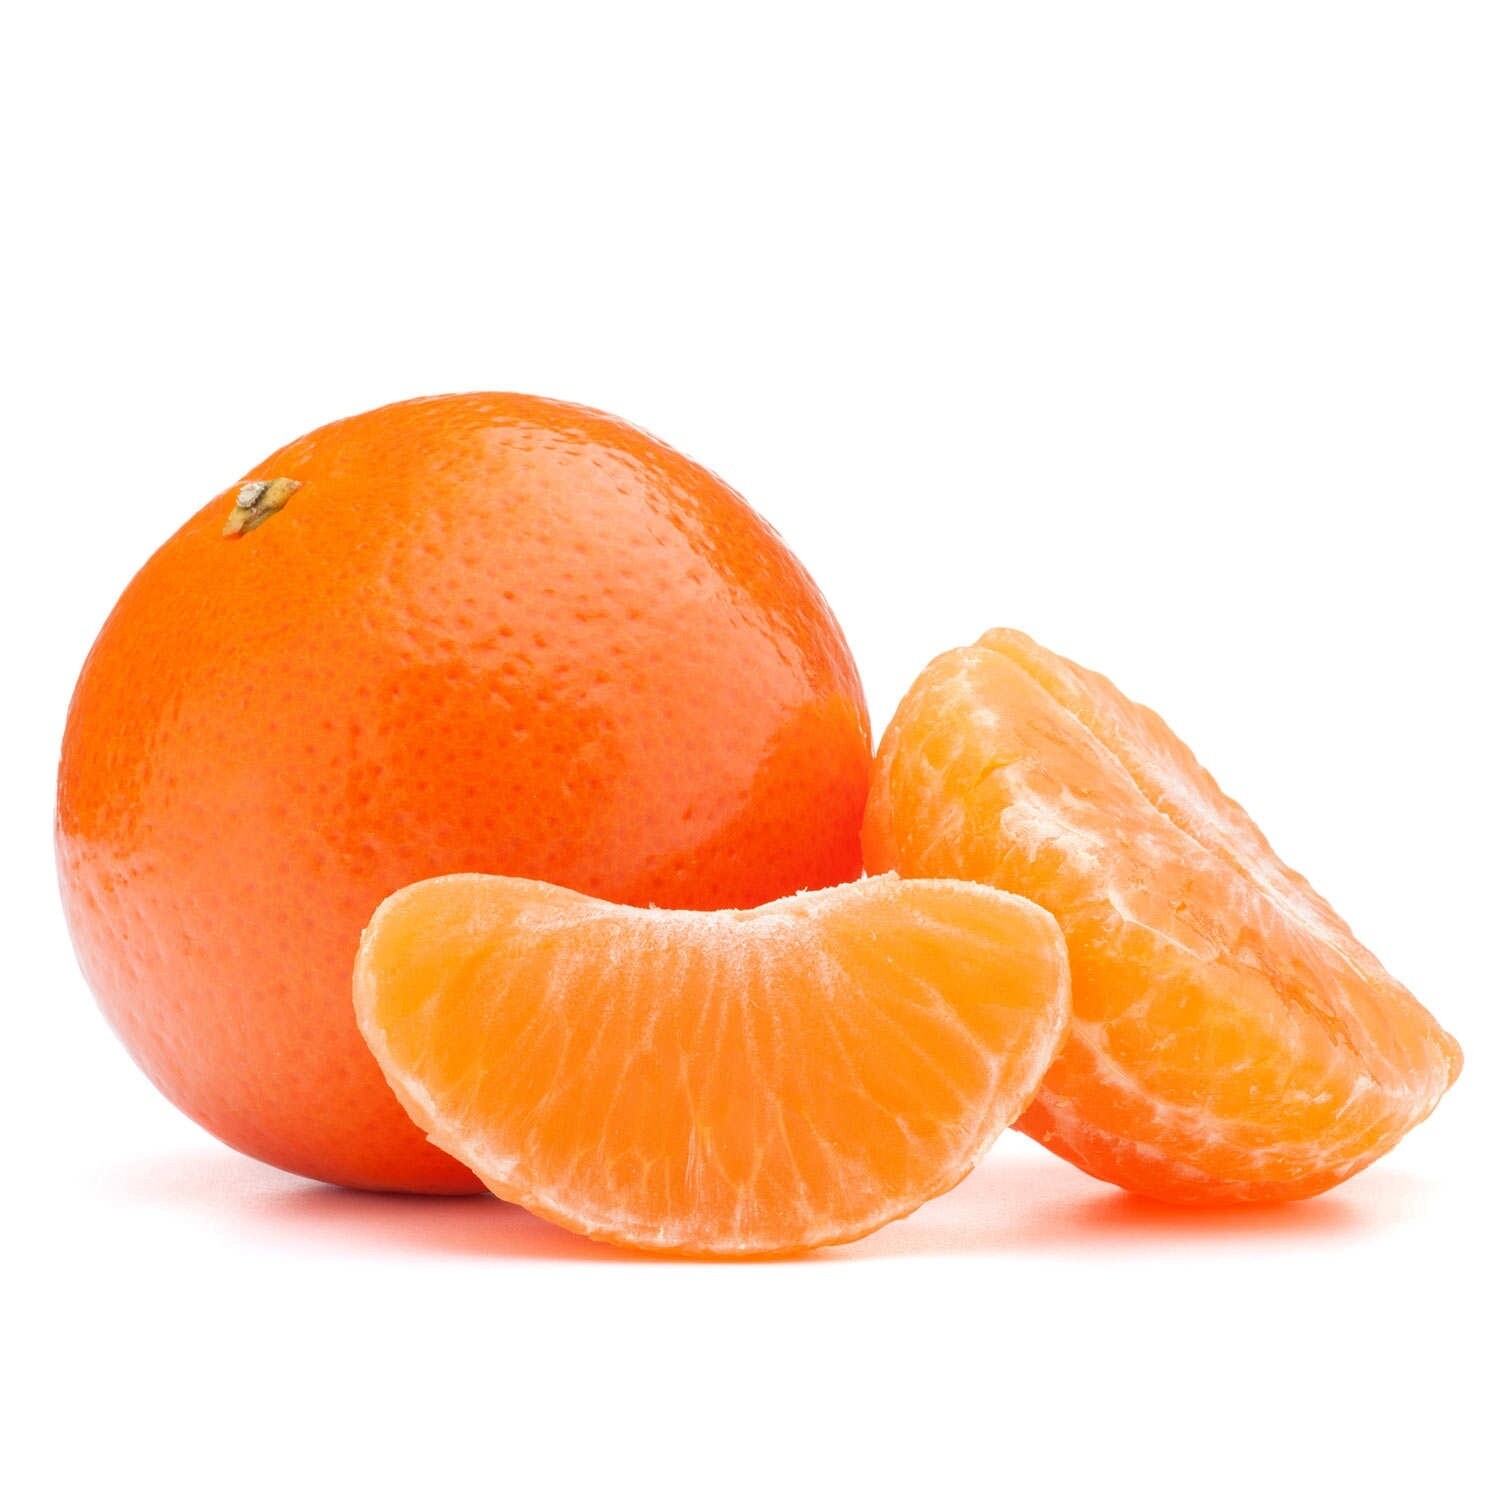 Mandarins - Satsuma - Organic - Local - per each